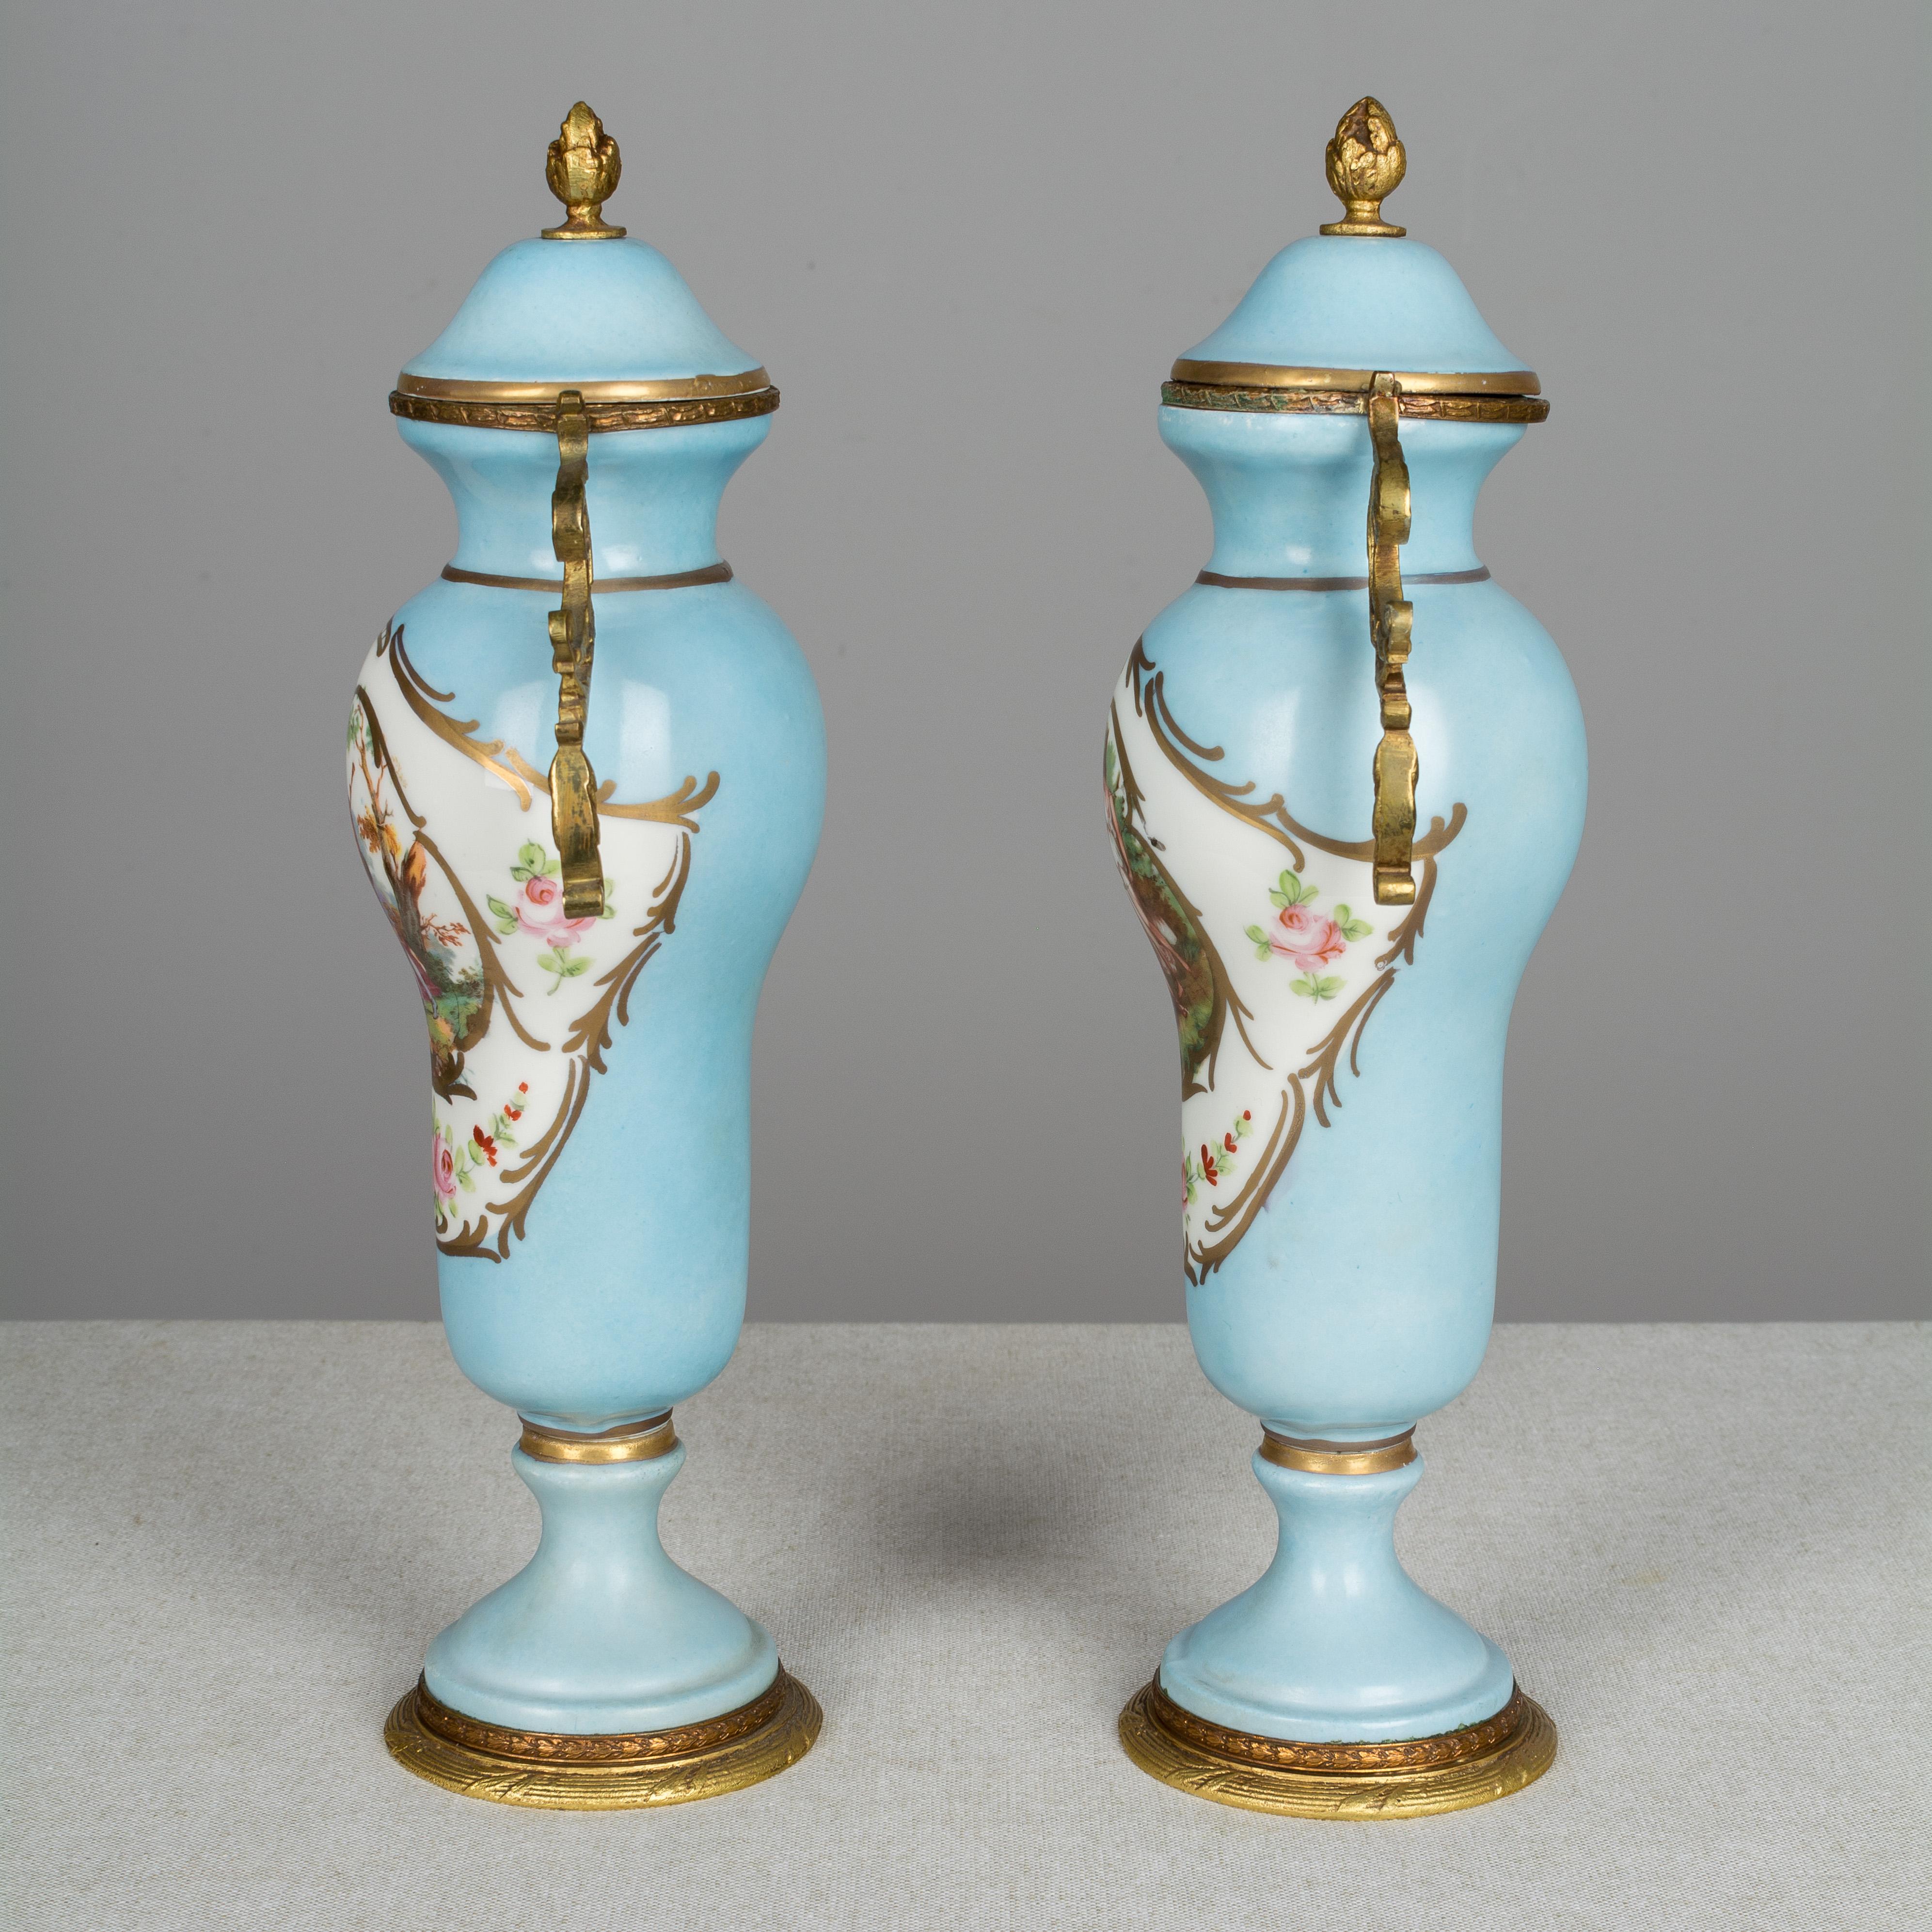 Cast Pair of French Sèvres Porcelain Urns